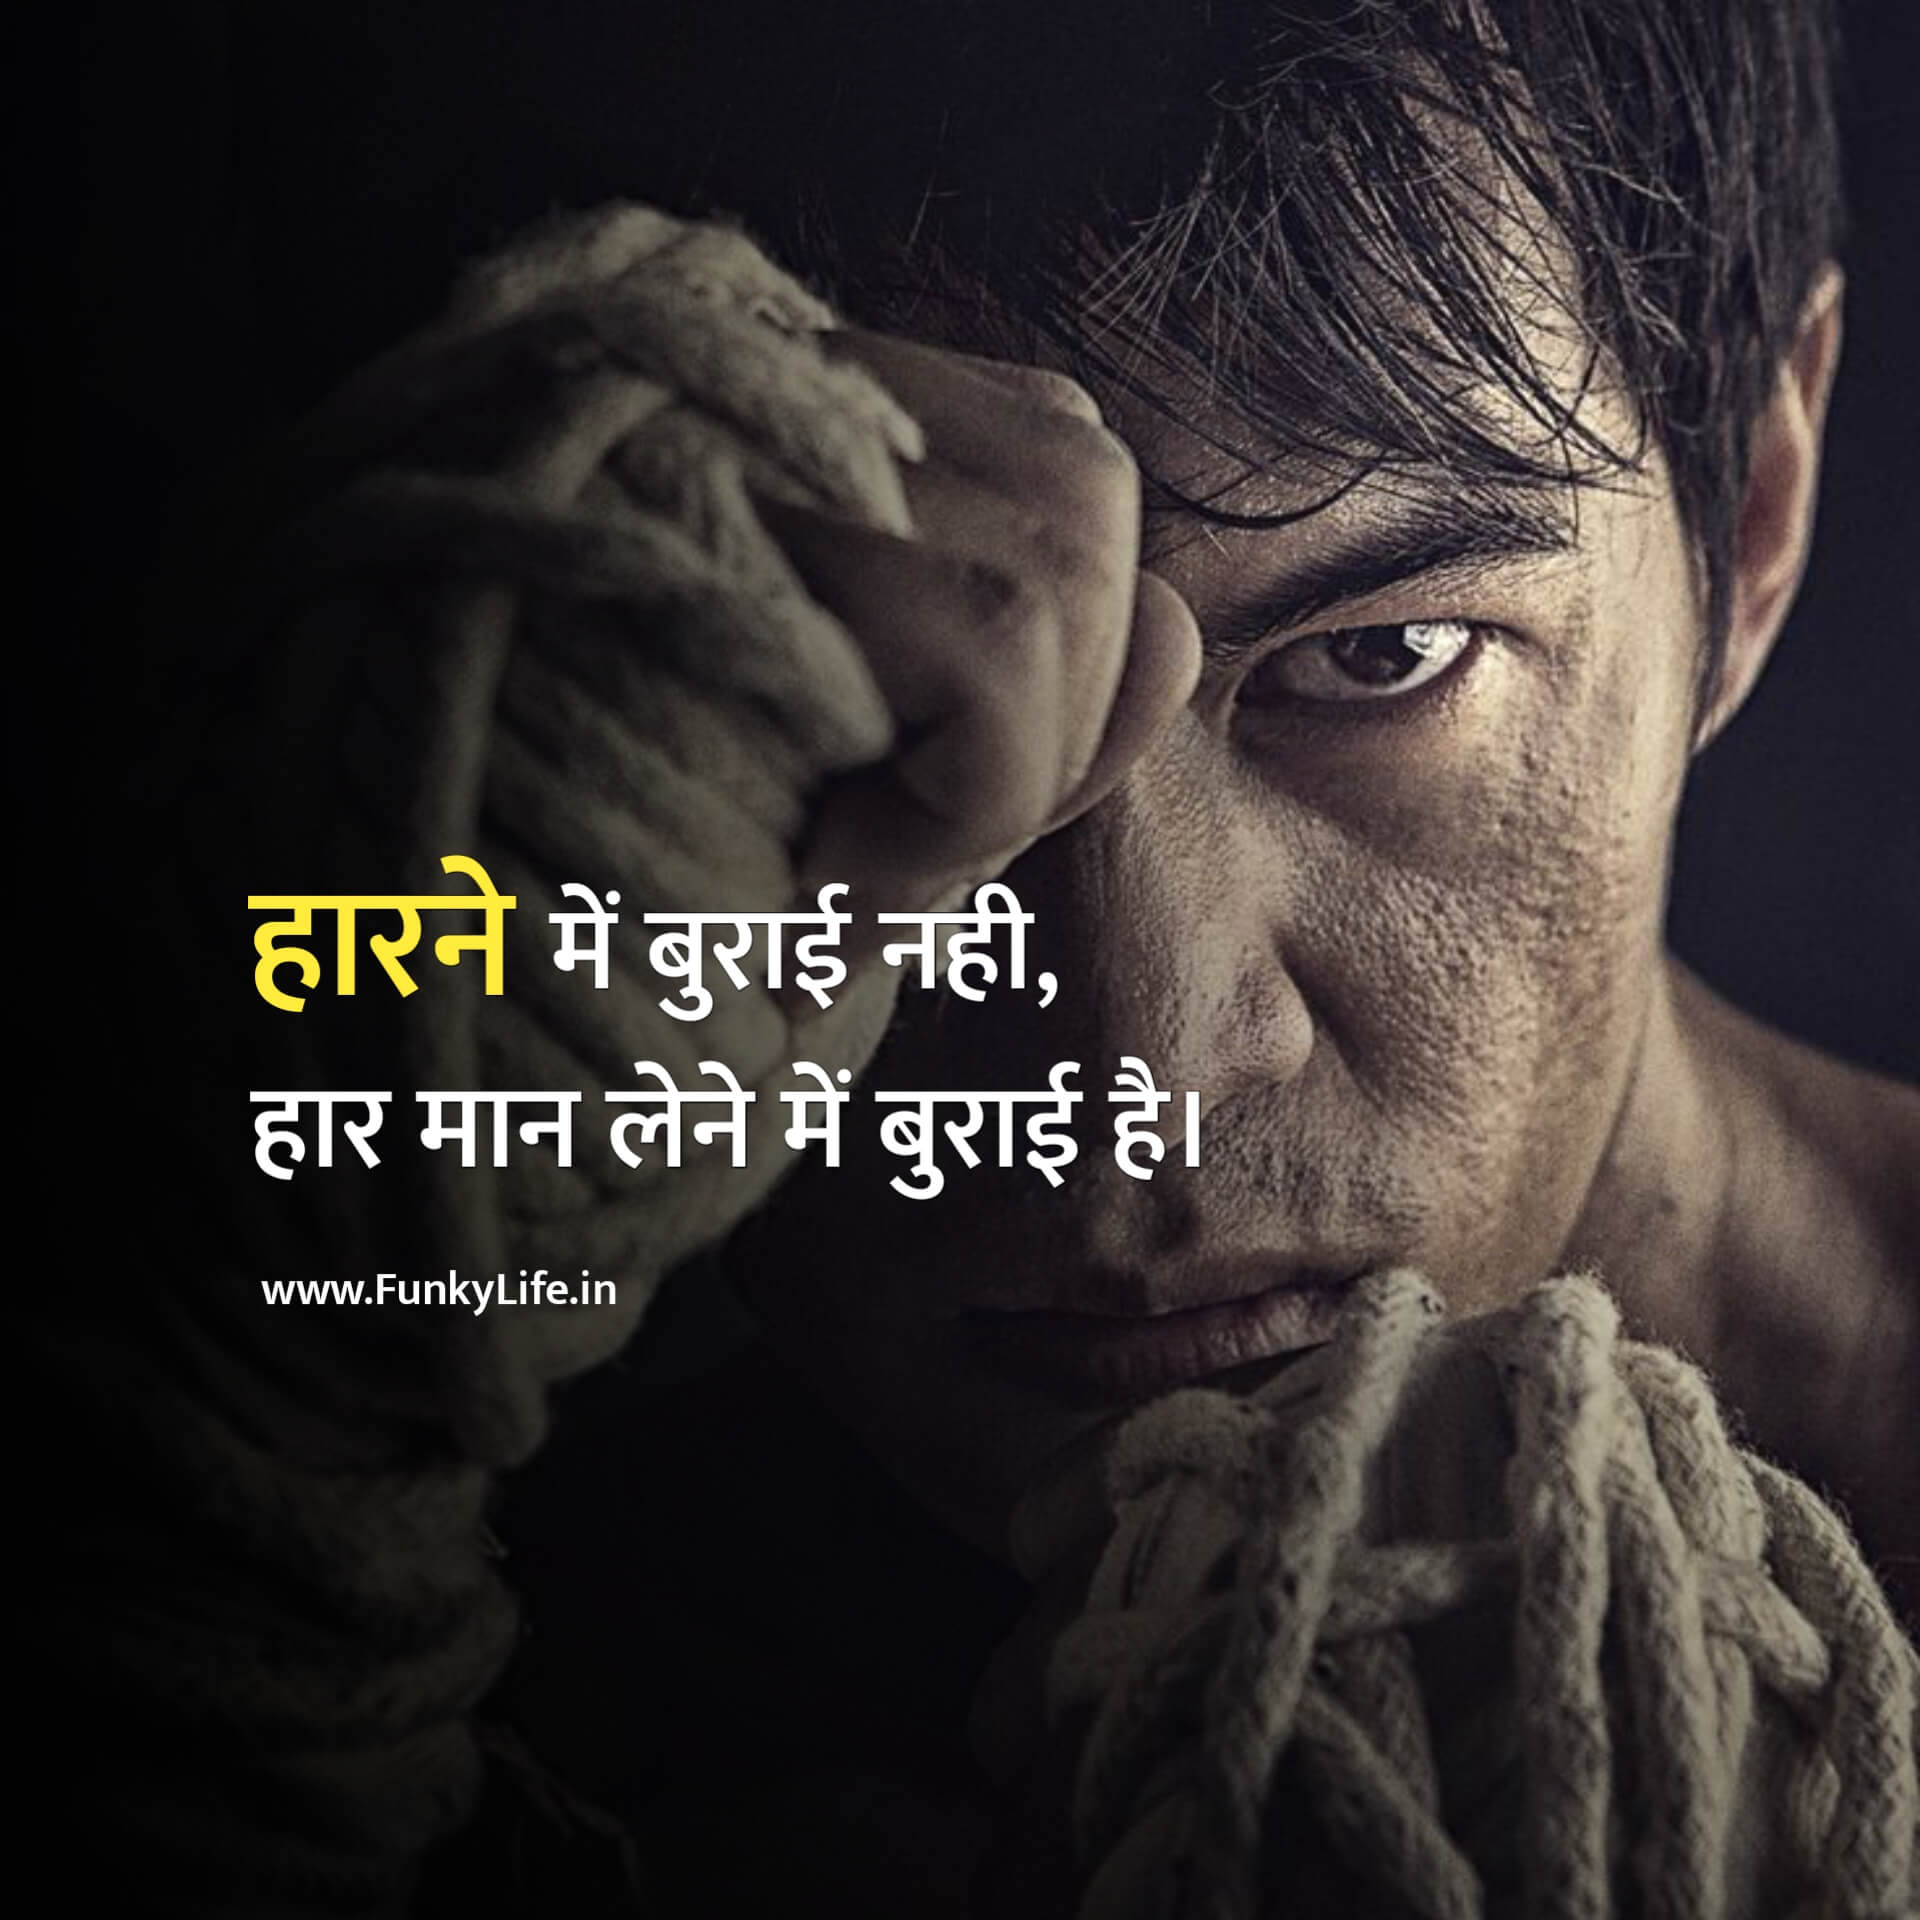 Attitude Motivational Quotes in Hindi